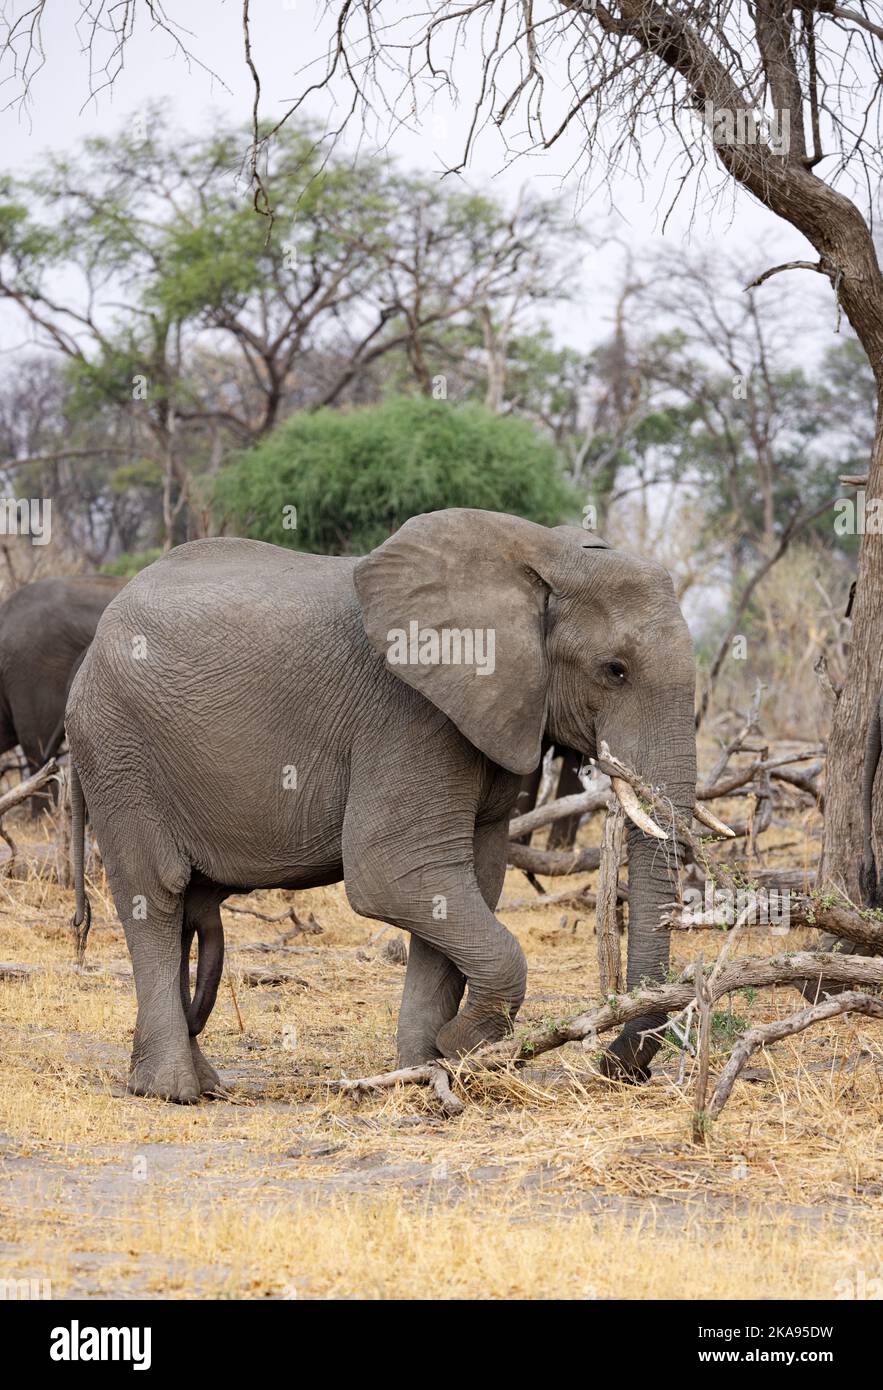 Afrikanische Elefanten, die sich an Baumzweigen ernähren, Moremi Wildreservat, Botswana Afrika. Loxodonta africana. Stockfoto